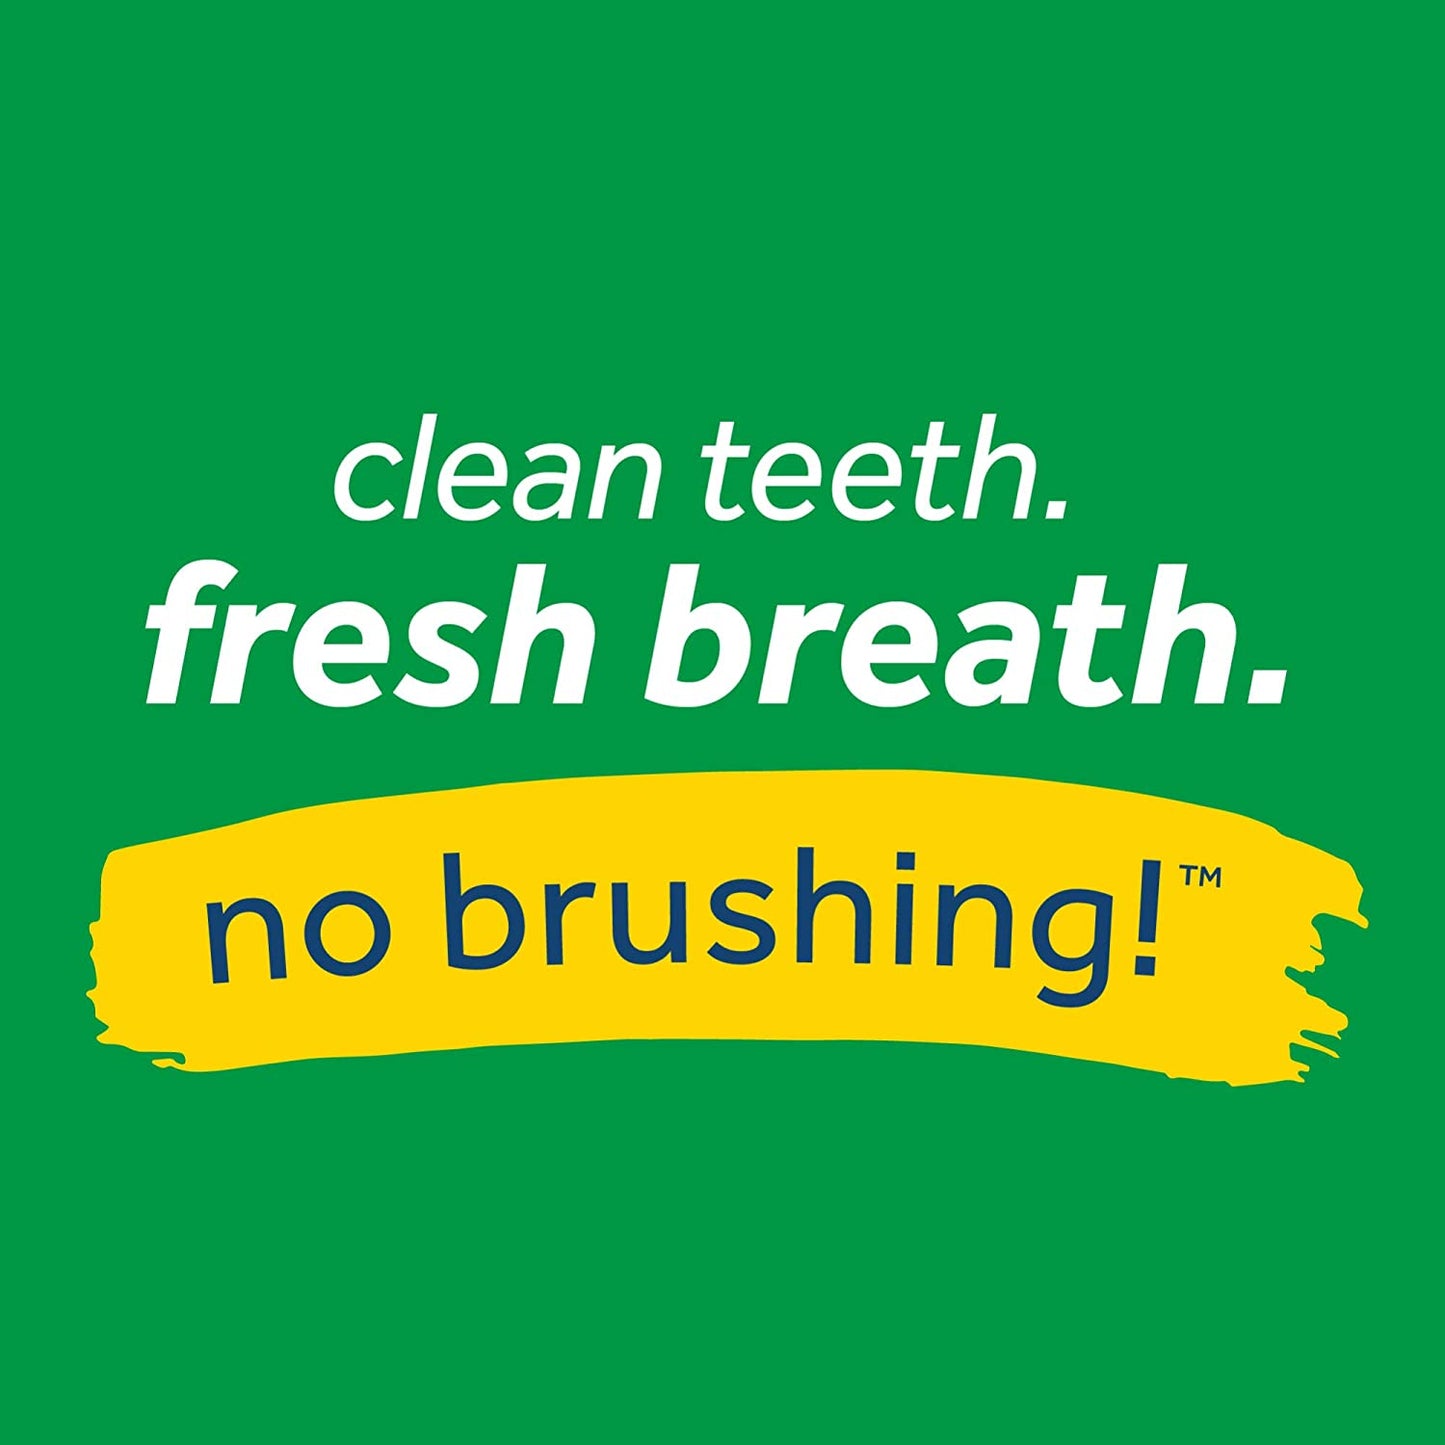 TropiClean Fresh Breath Oral Care Foam  Health Care  | PetMax Canada